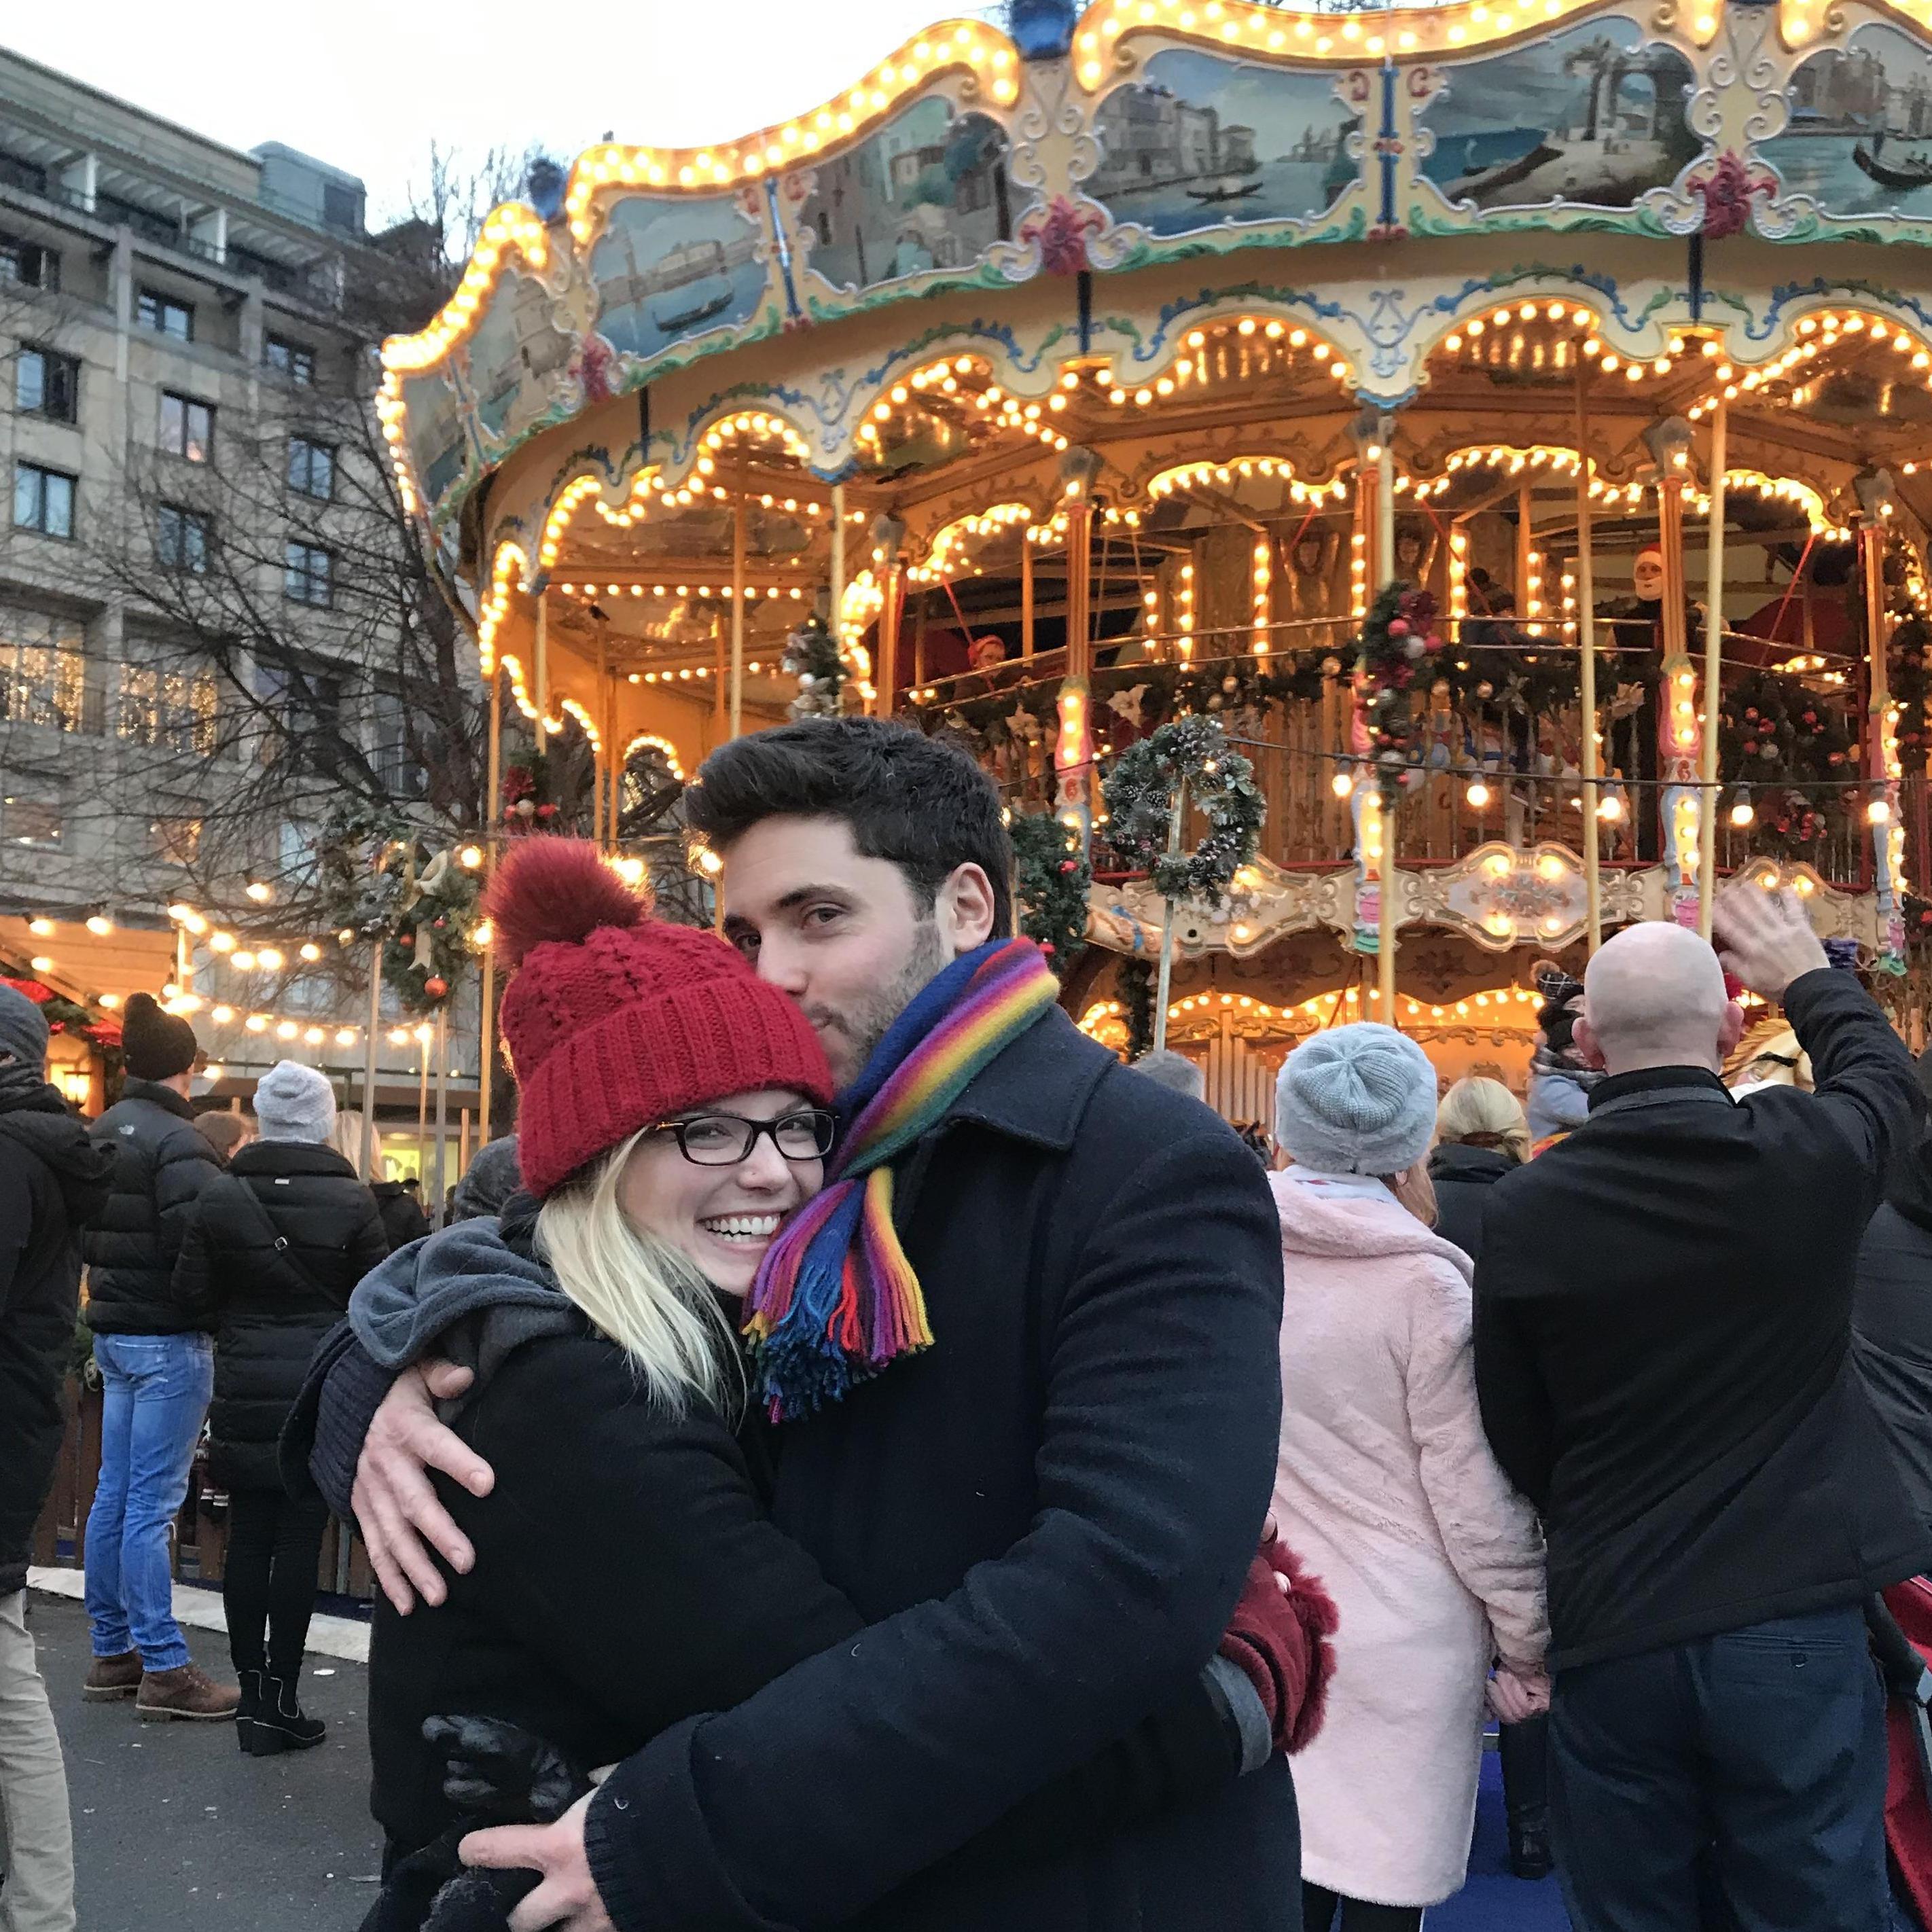 Enjoying the holiday festivities in Edinburgh
2018